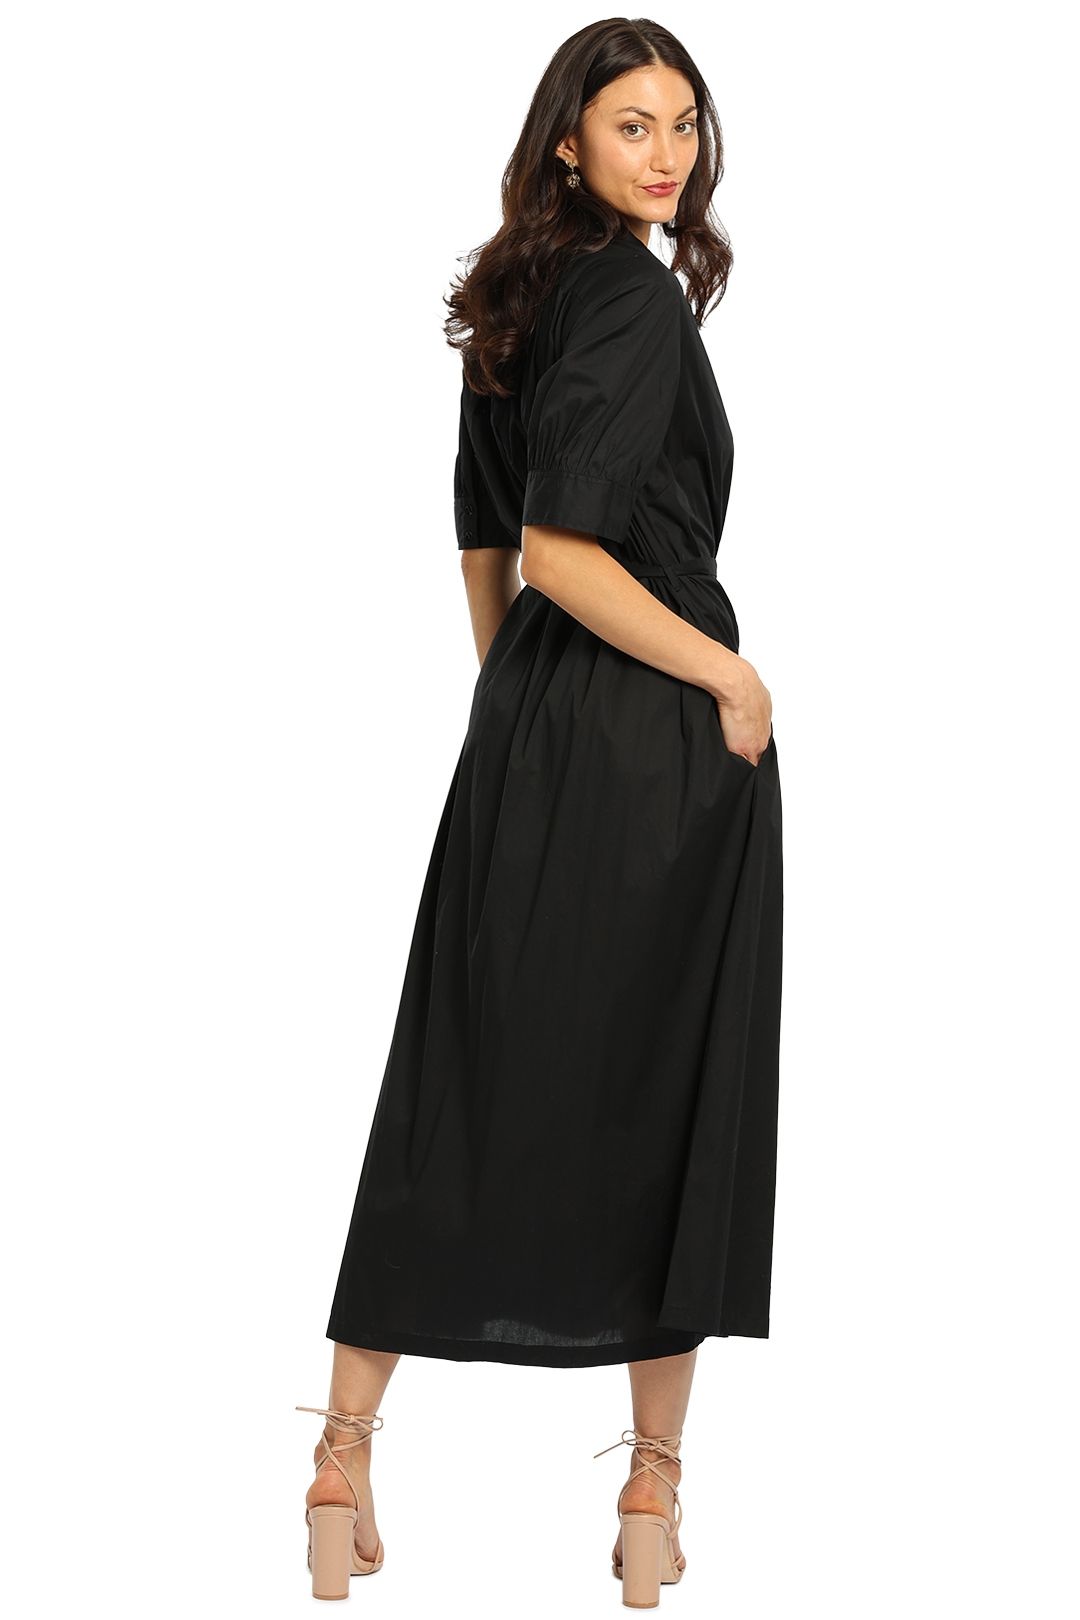 Kate Sylvester Jo Dress Black Midi Length